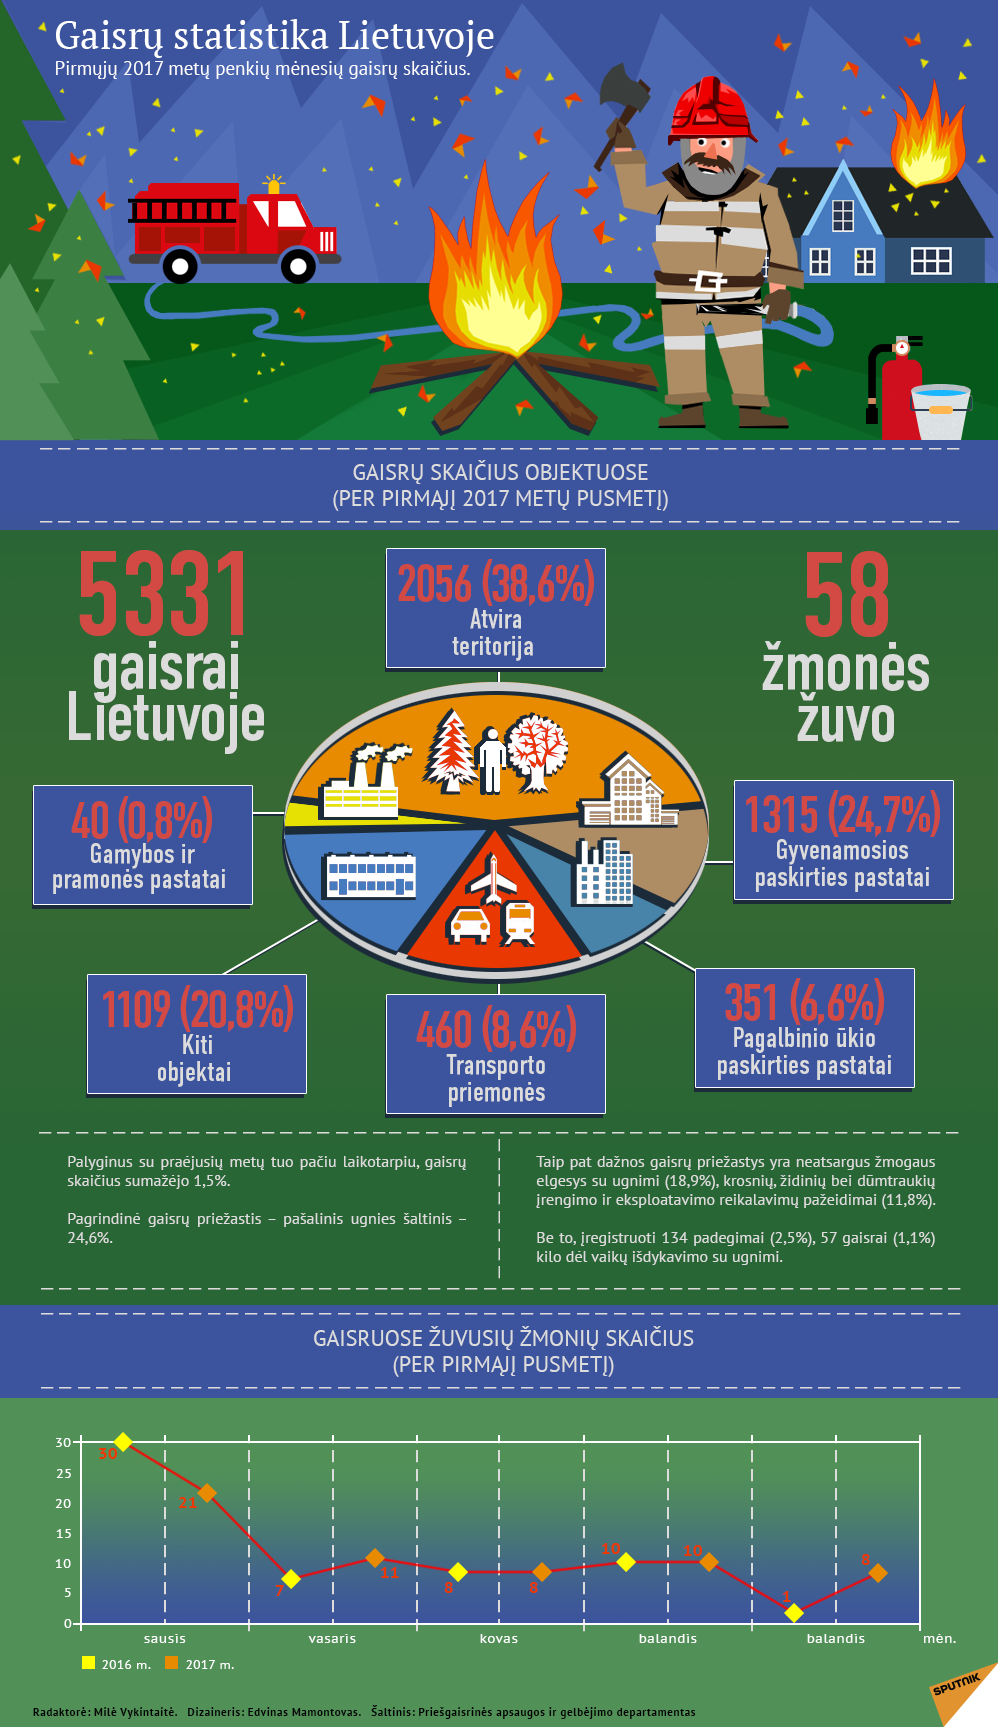 Gaisrų statistika Lietuvoje - Sputnik Lietuva